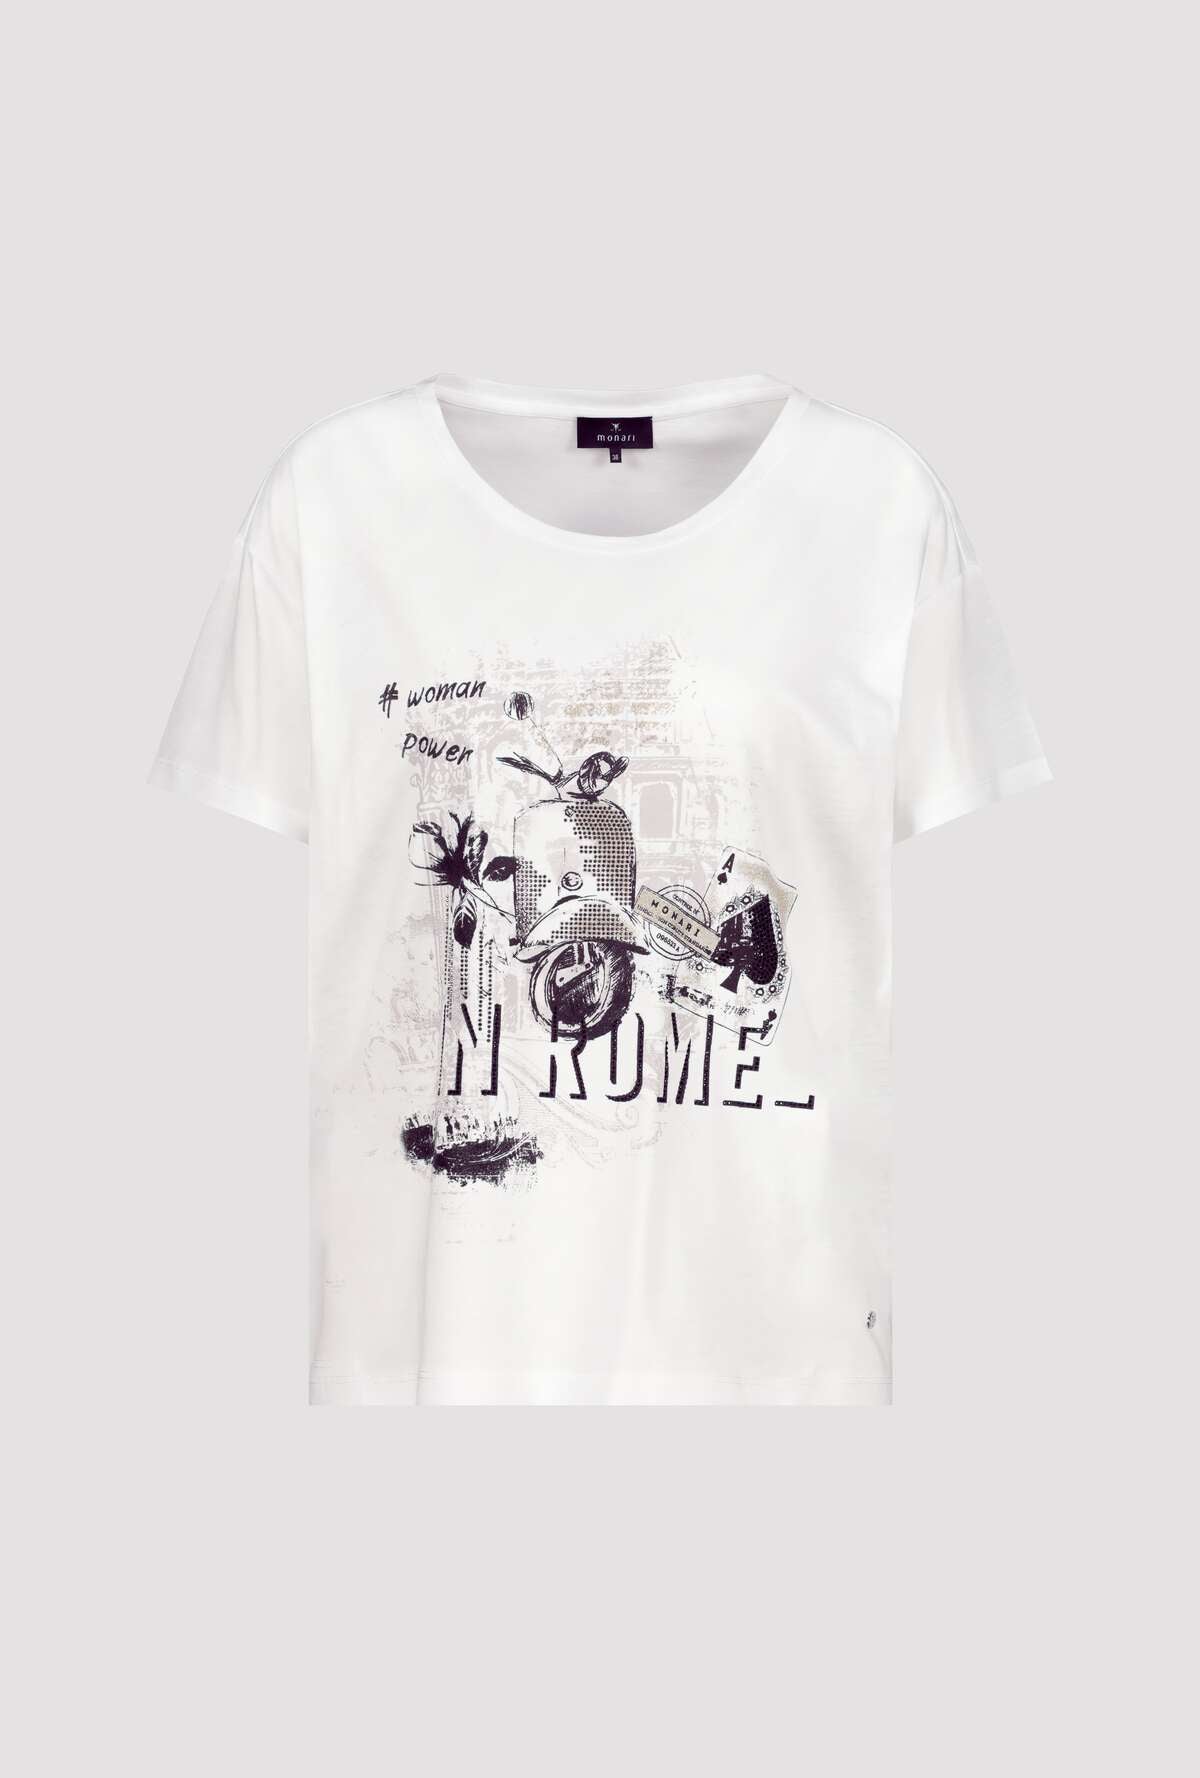 Monari White T-shirt/Black Print with Diamantés